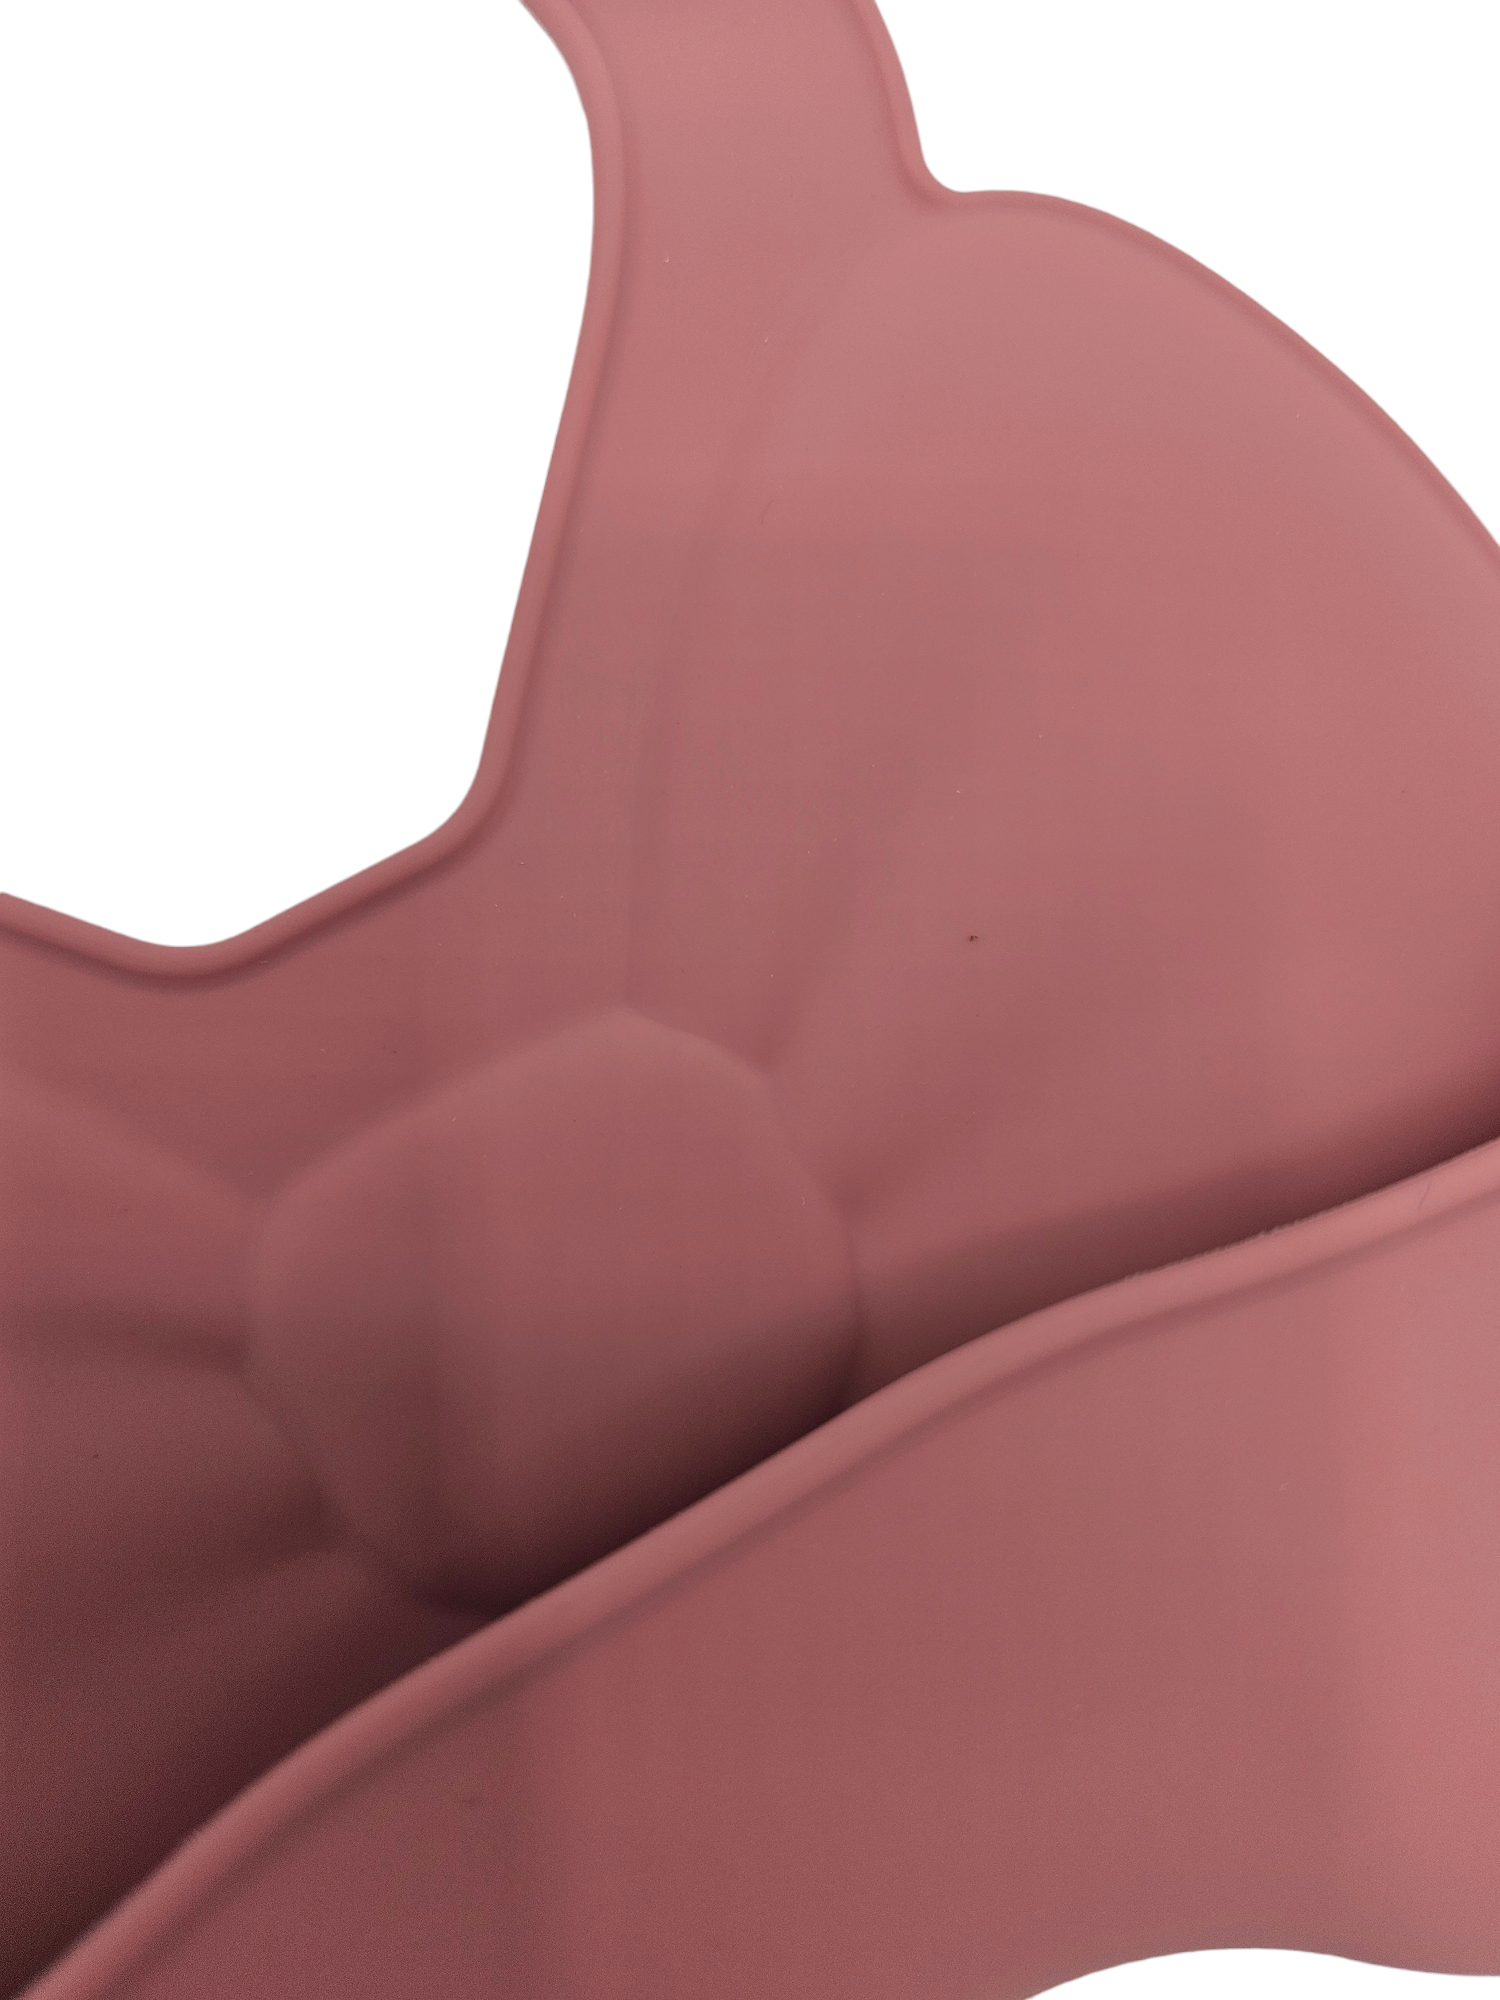 Darker Dusty Pink Bow Design Adjustable Waterproof Silicone Weaning Bib - Betty Brown Boutique Ltd